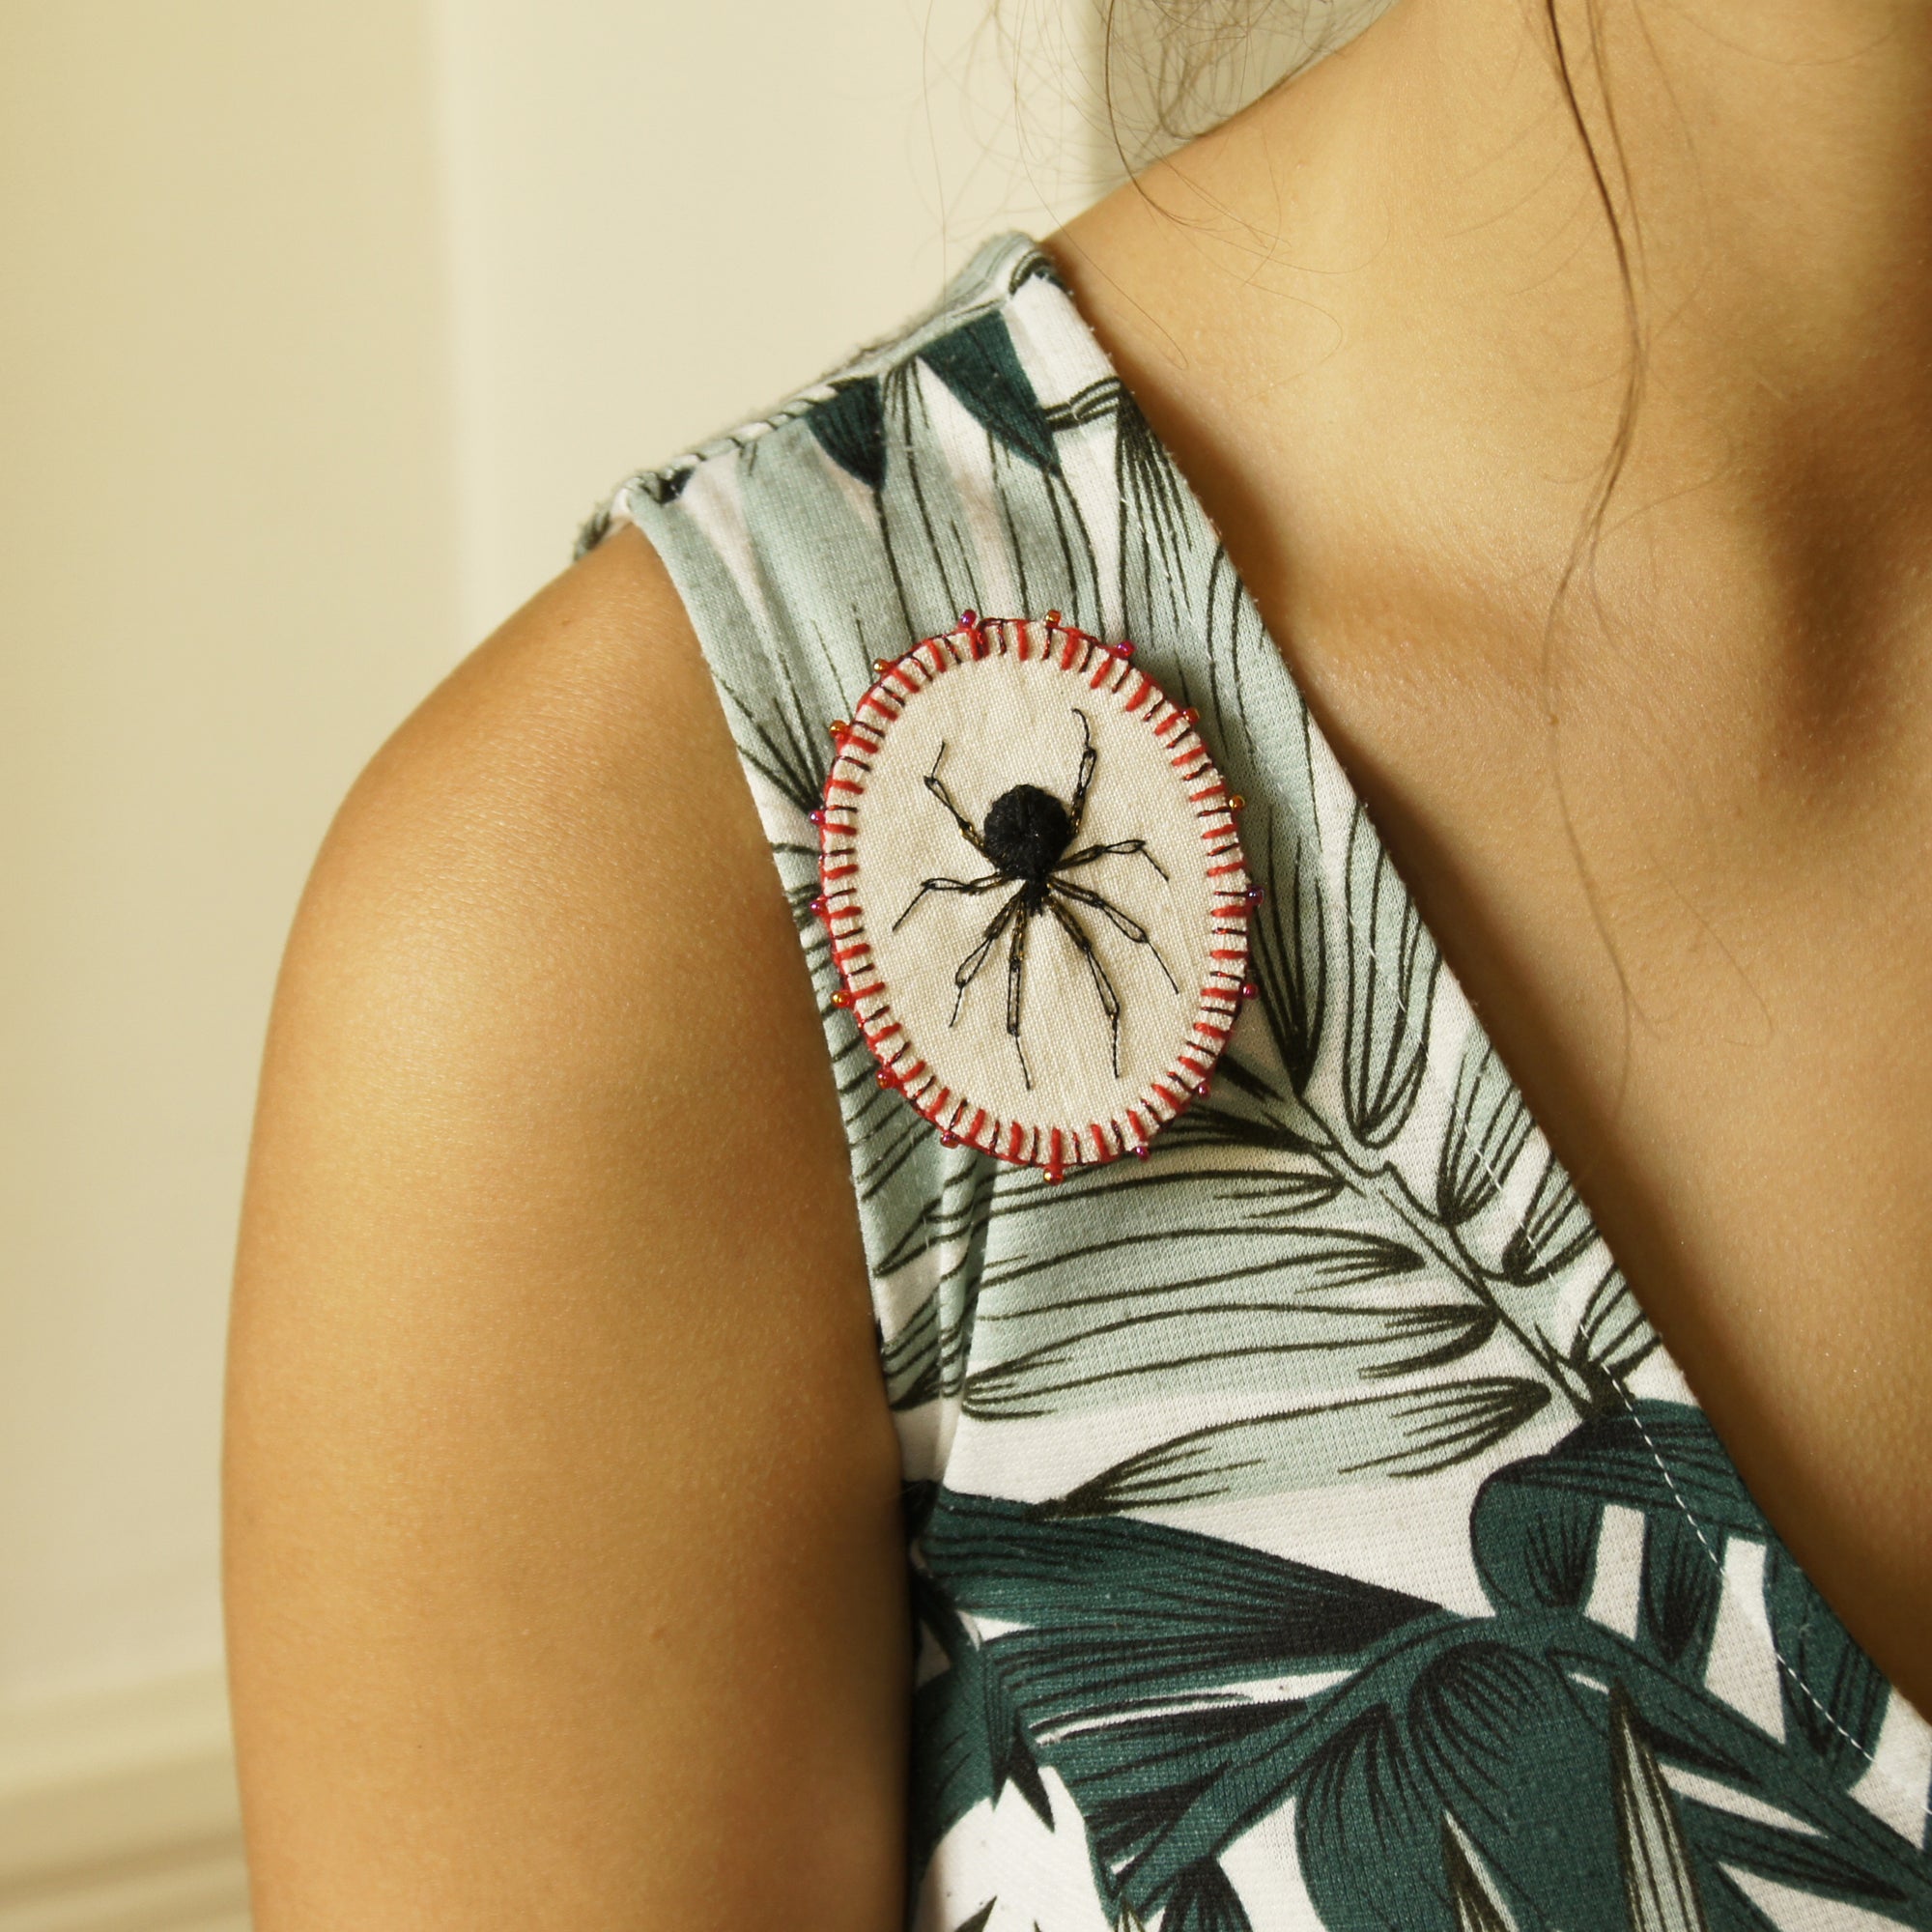 Embroidered Black Widow Spider Brooch Pin Arachnid Jewelry